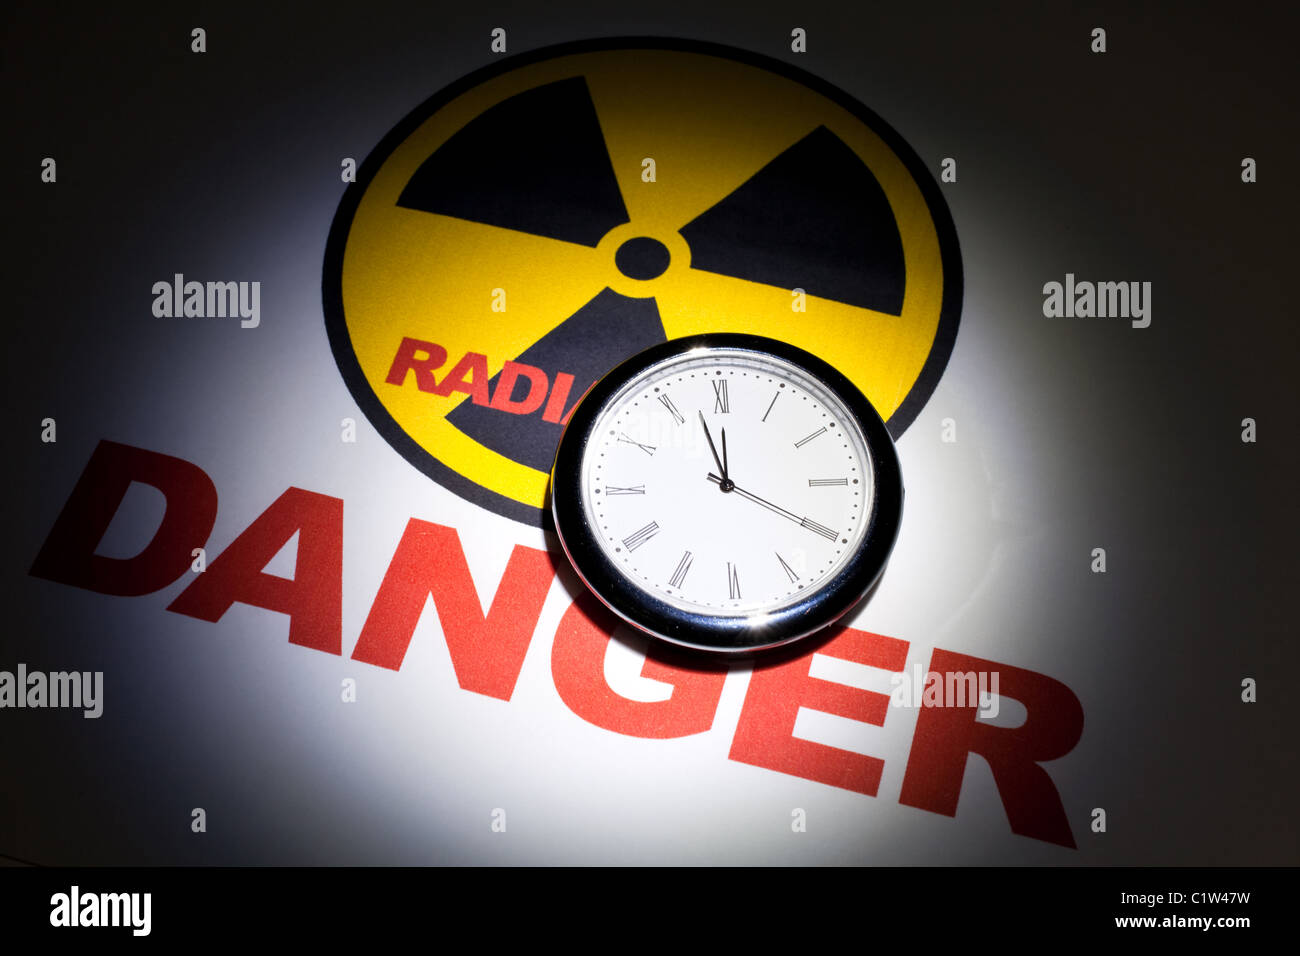 Radiation hazard sign for background Stock Photo